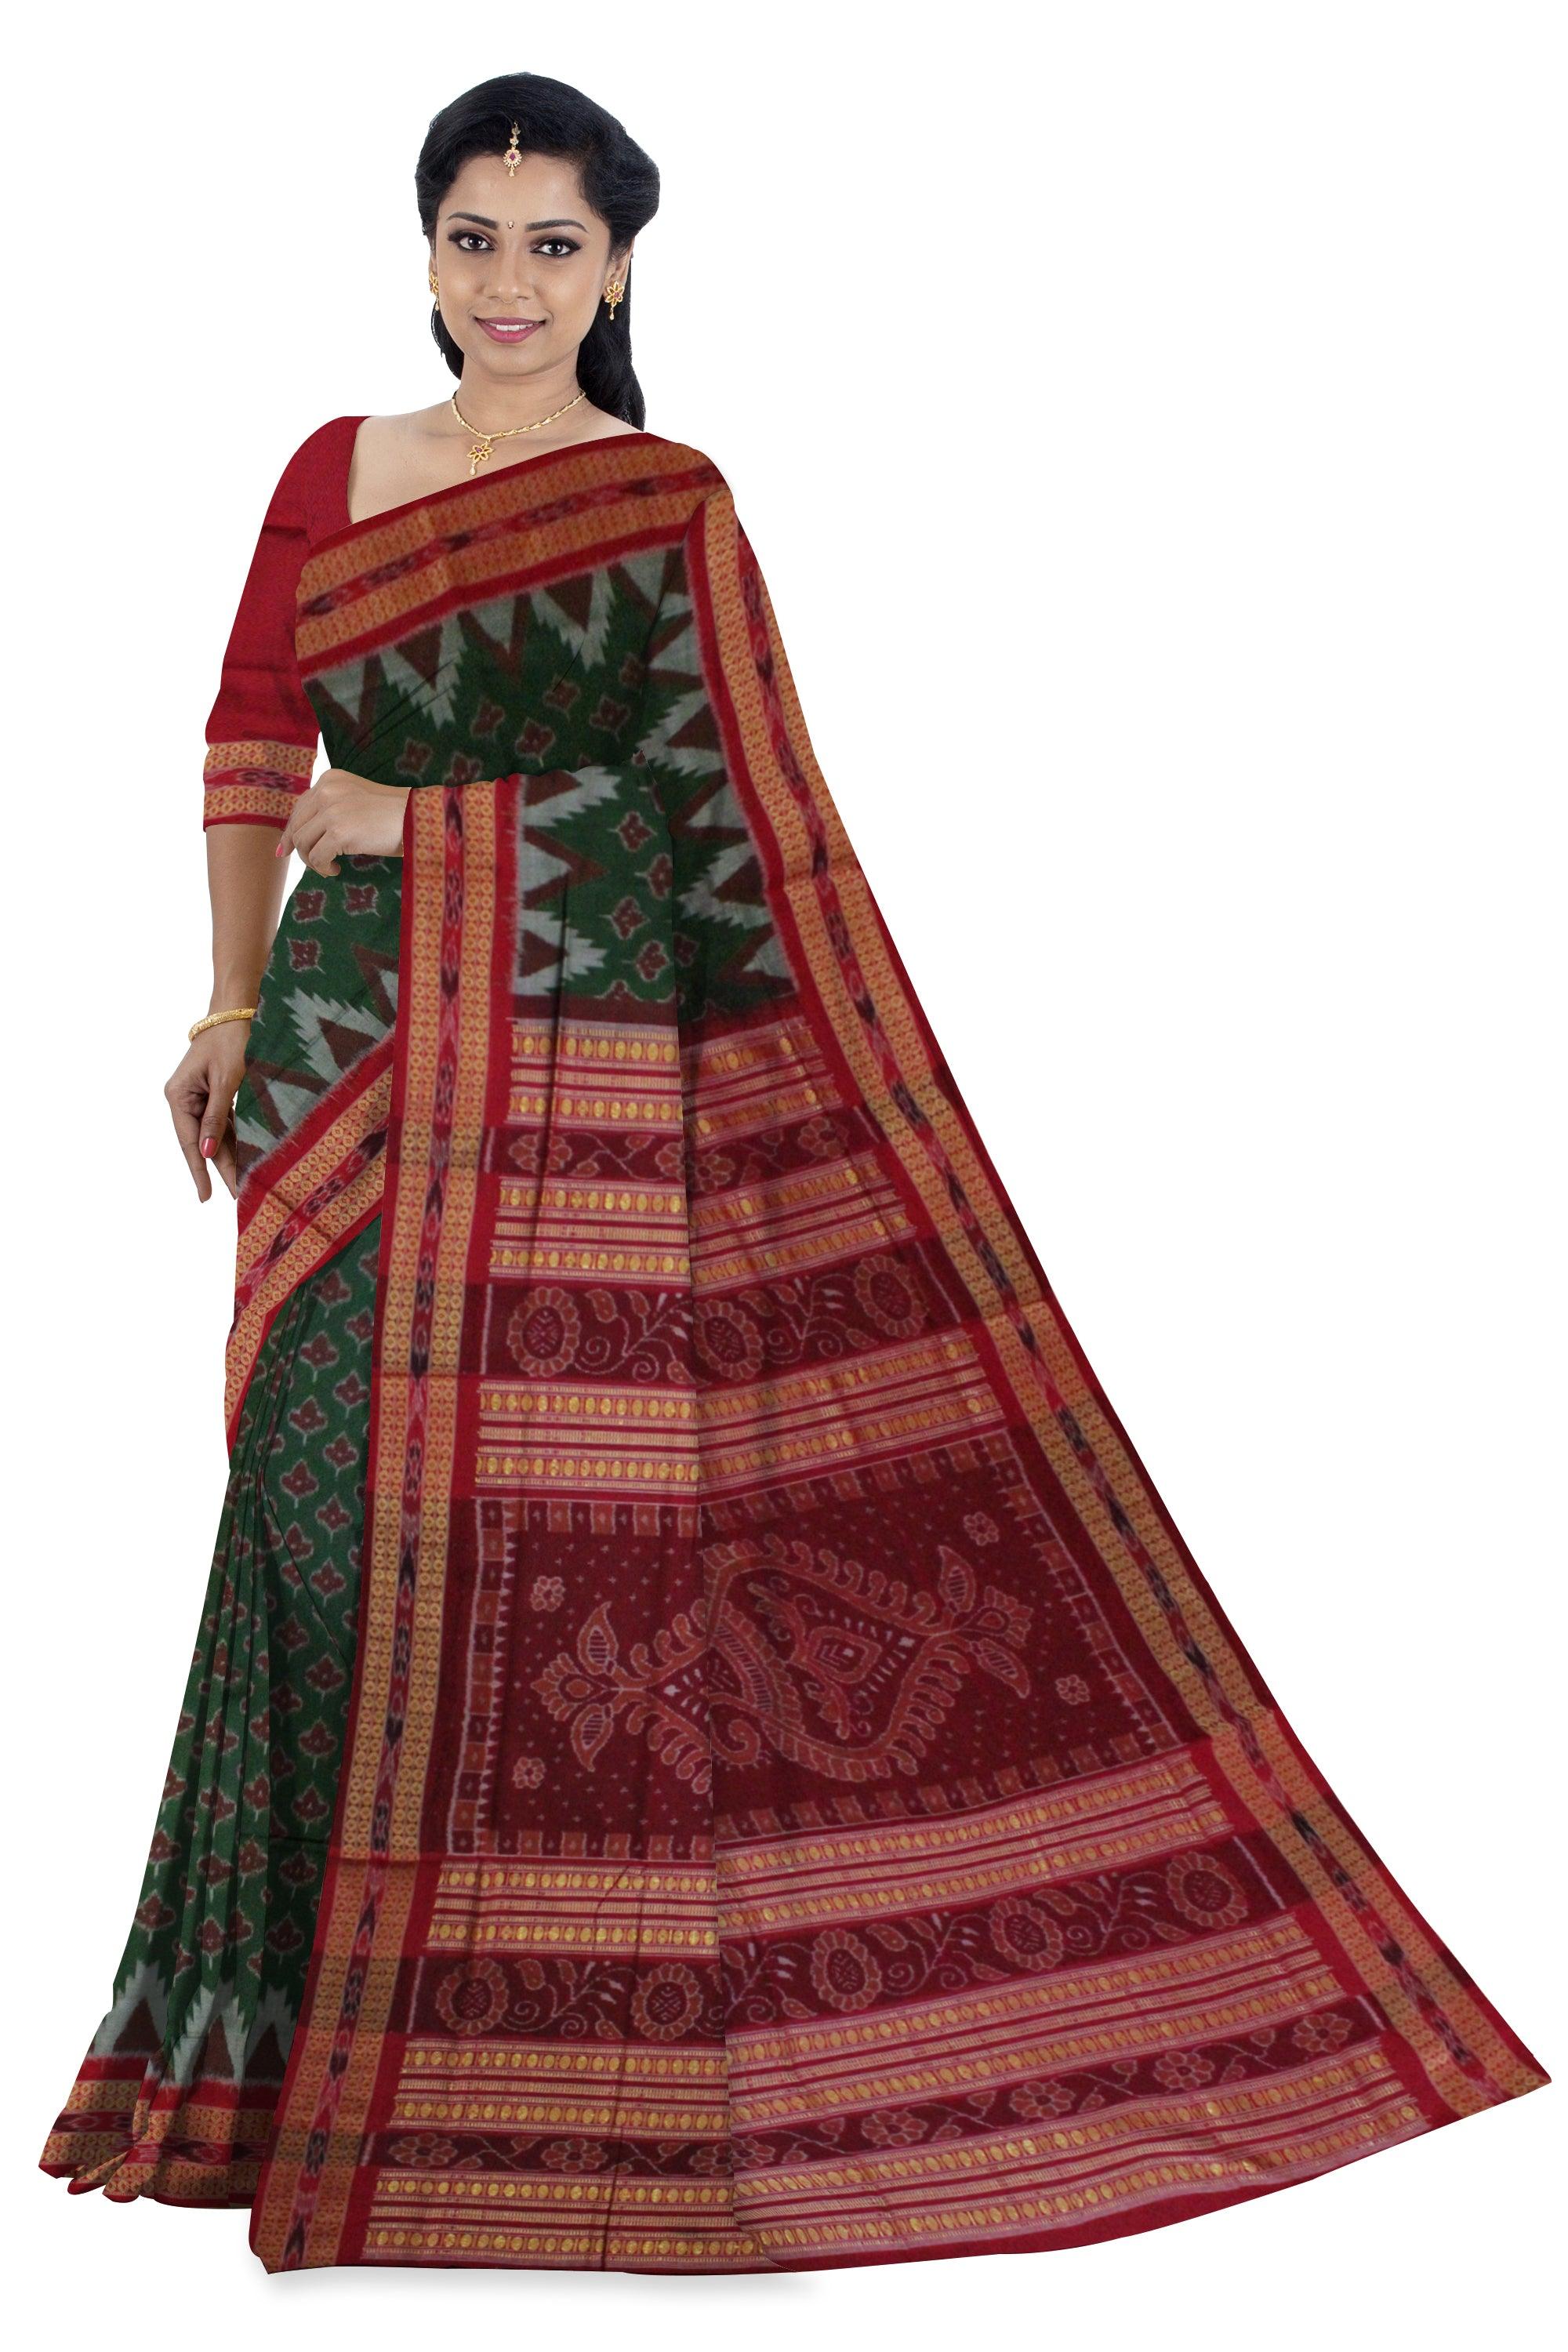 Sambalpuri Cotton Saree in  leaf pattern in body in  Green Colour - Koshali Arts & Crafts Enterprise